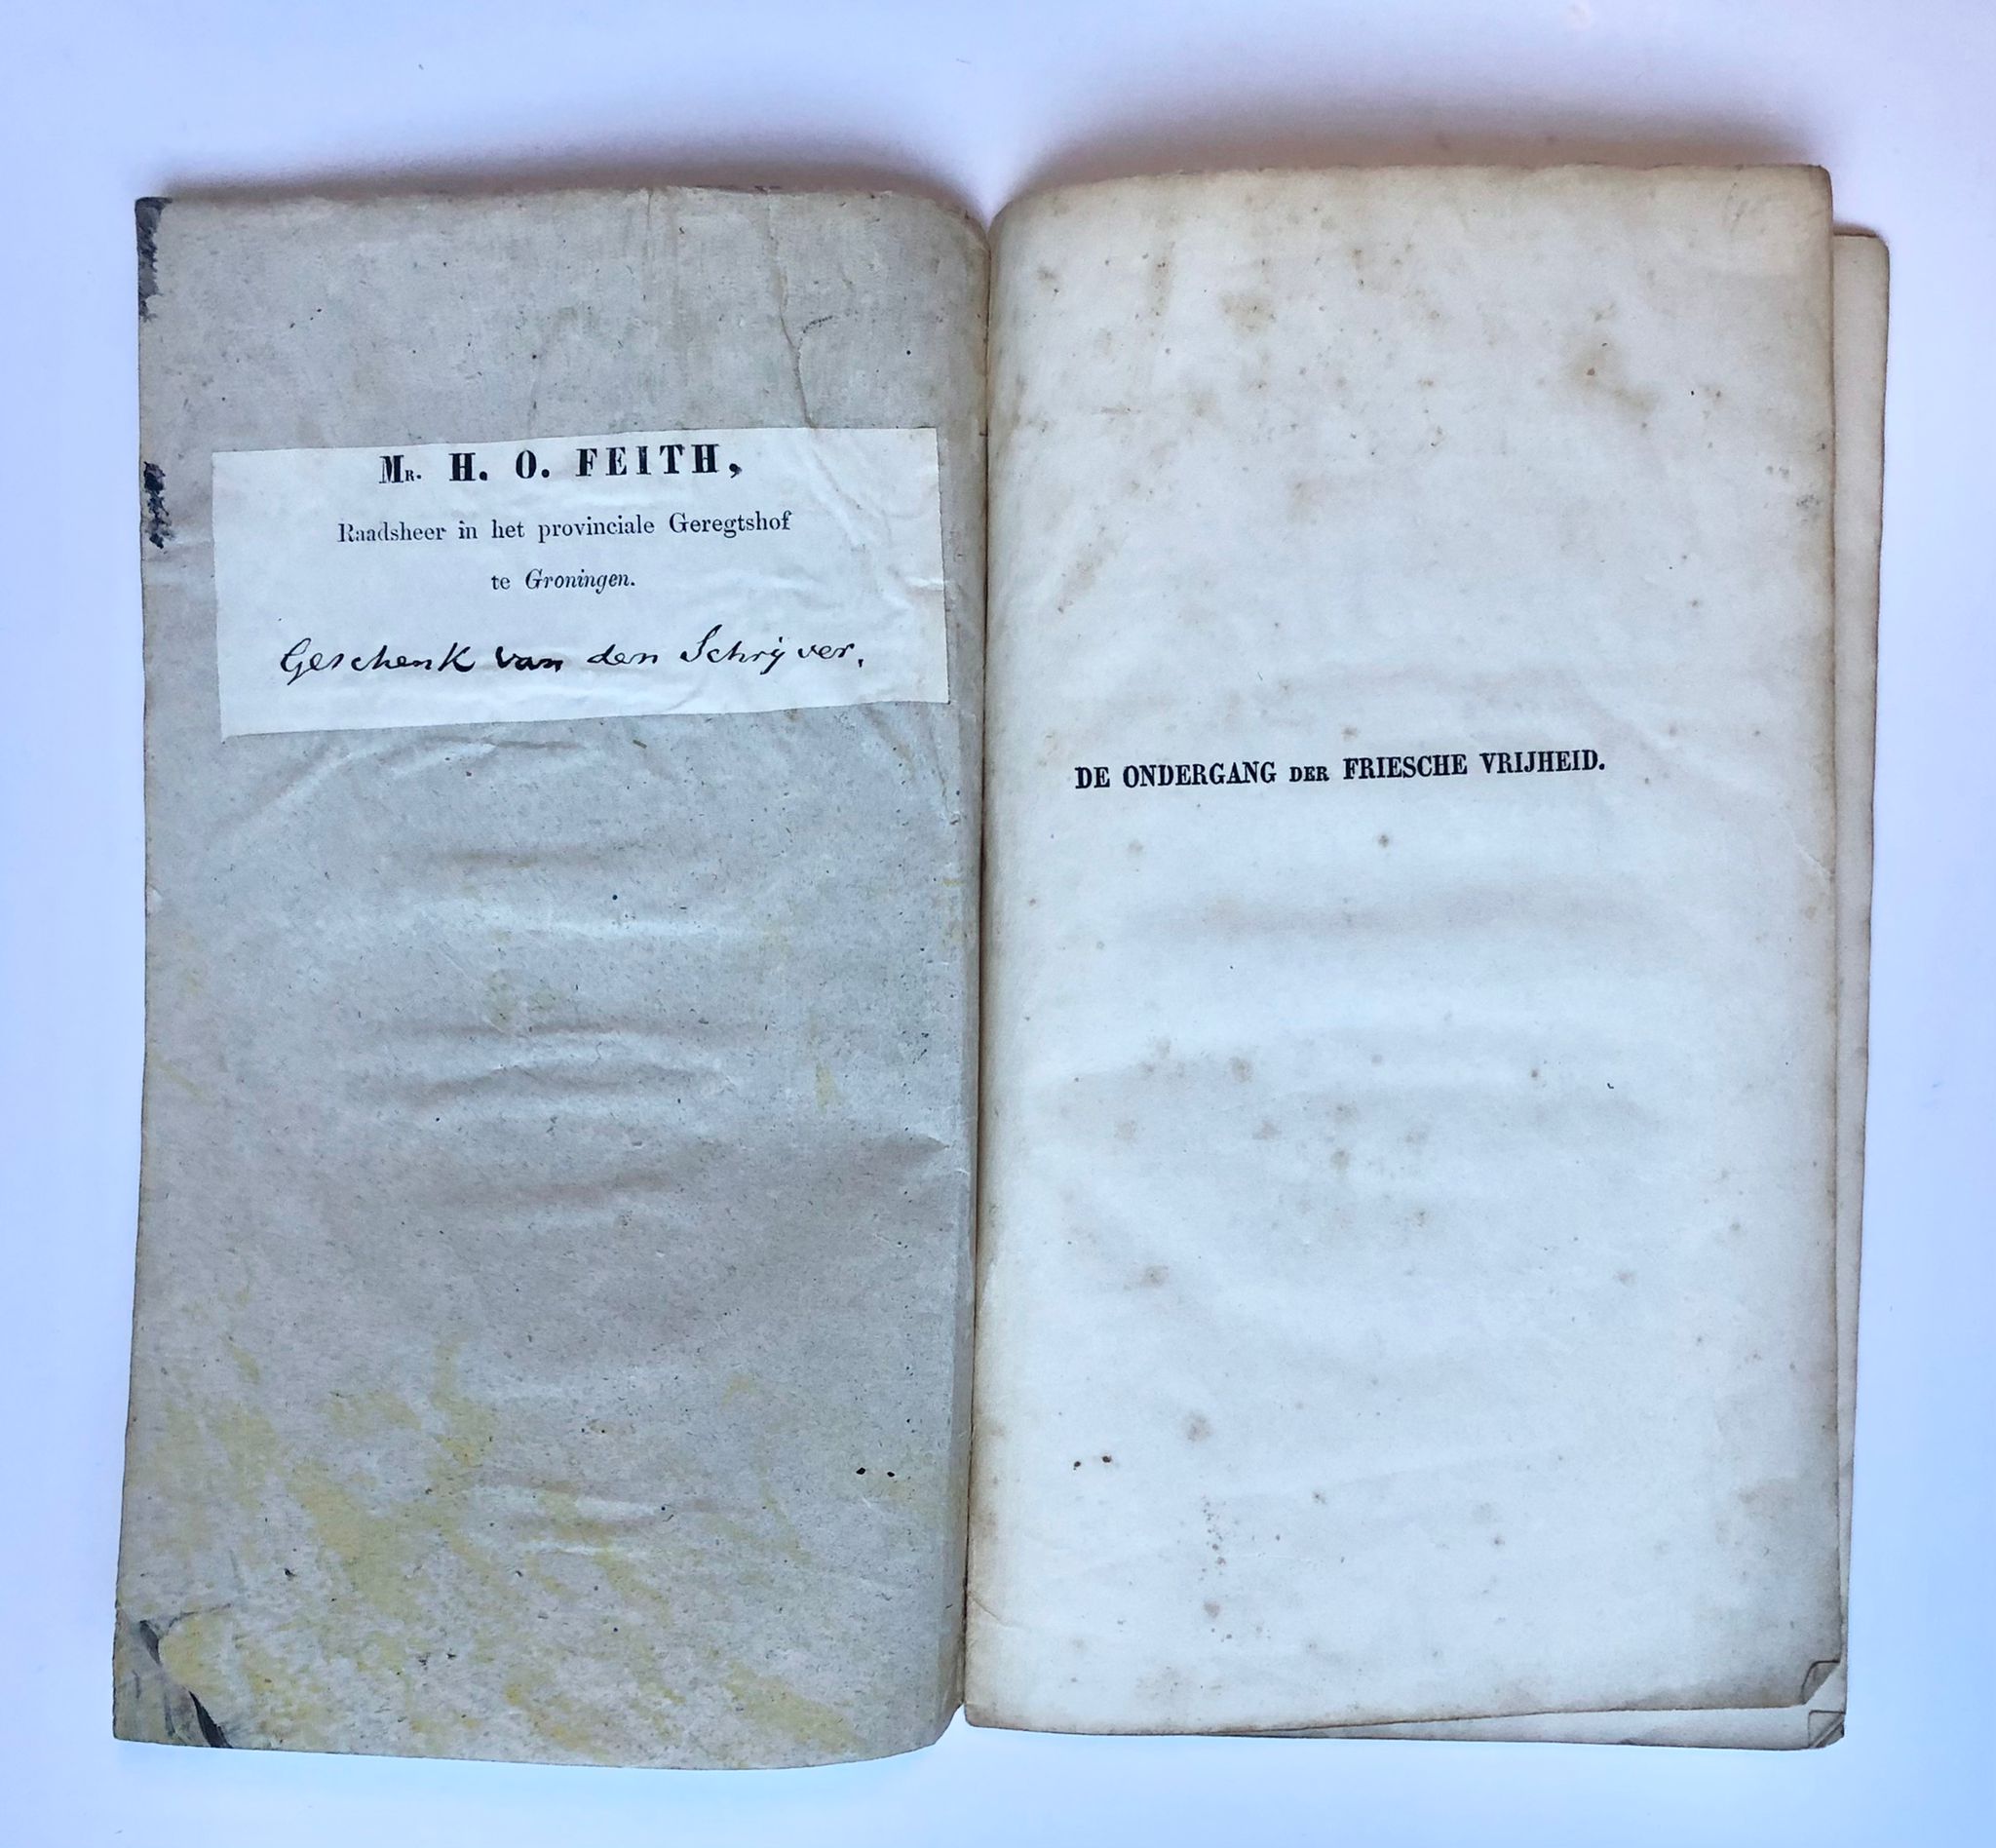 [Friesland 1840] De ondergang der Friesche Vrijheid, Hallum, 1840, 25 pp. Gift by the author E J Diest Lorgion to Mr. H.O. Feith